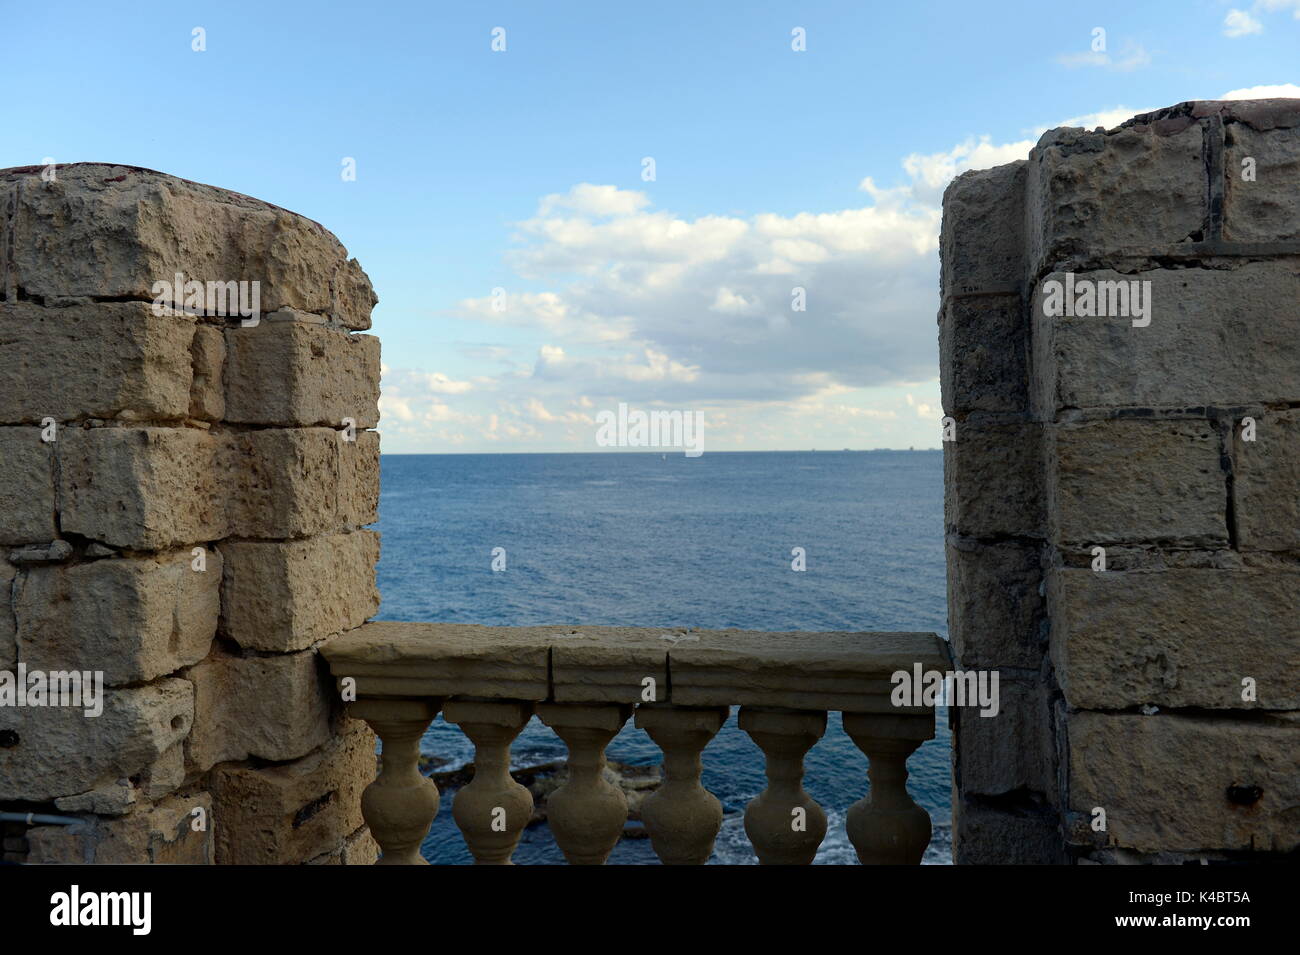 St Julians, Bay, Malta Foto de stock